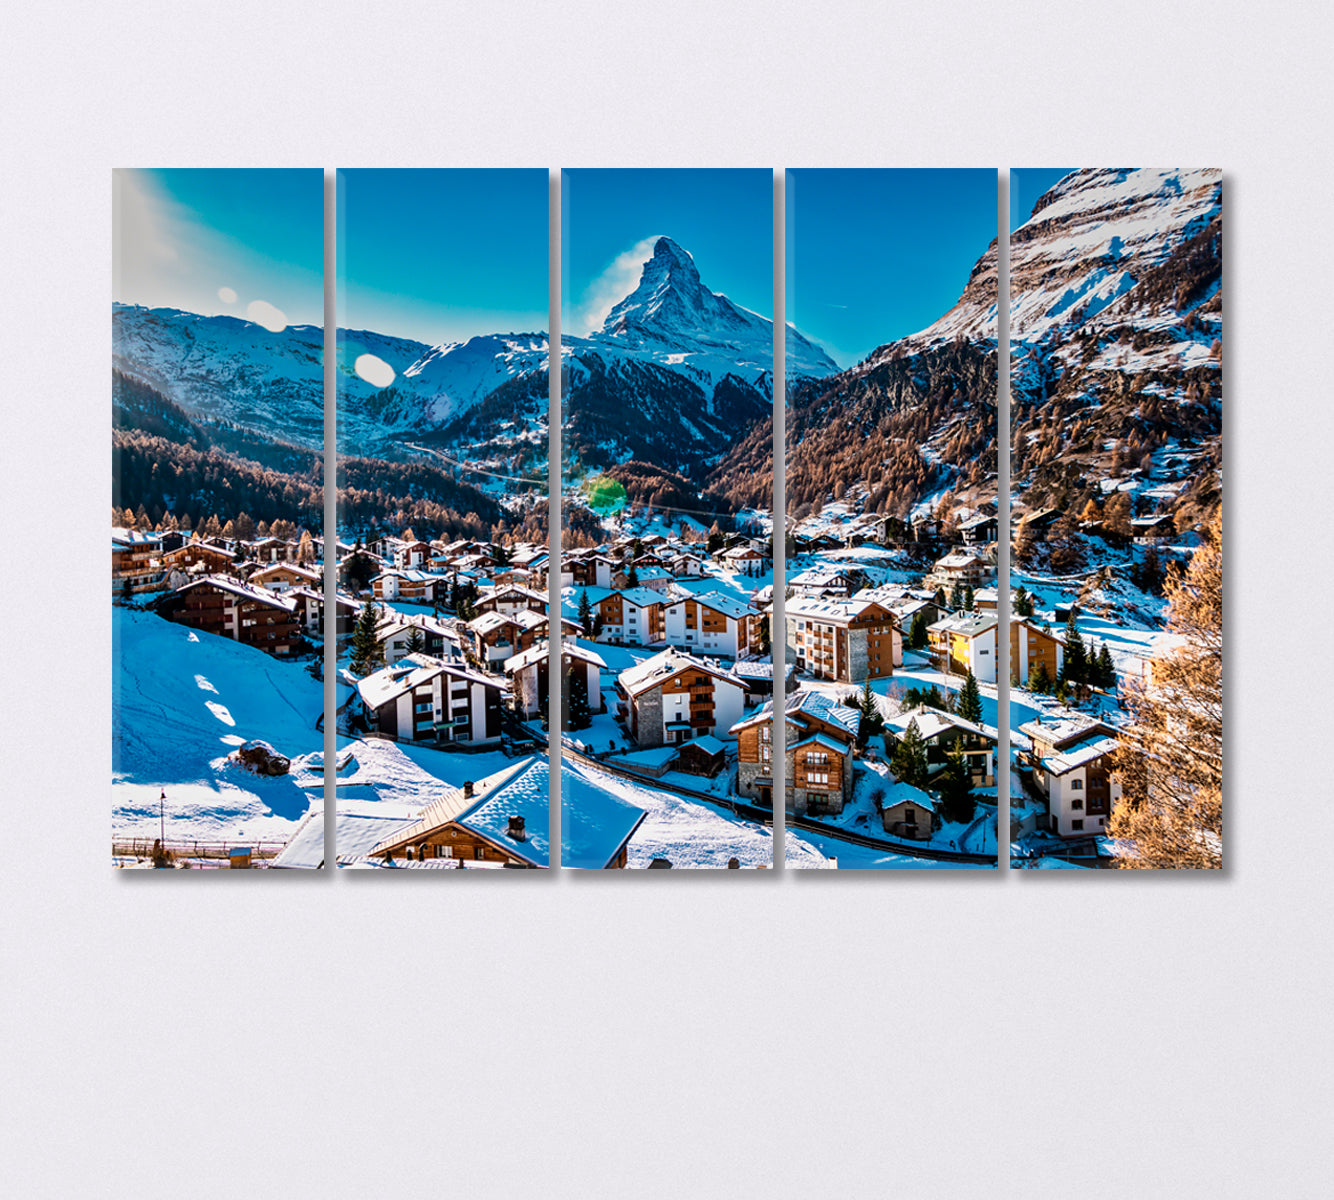 Zermatt Village at Matterhorn Mountain Canvas Print-Canvas Print-CetArt-5 Panels-36x24 inches-CetArt